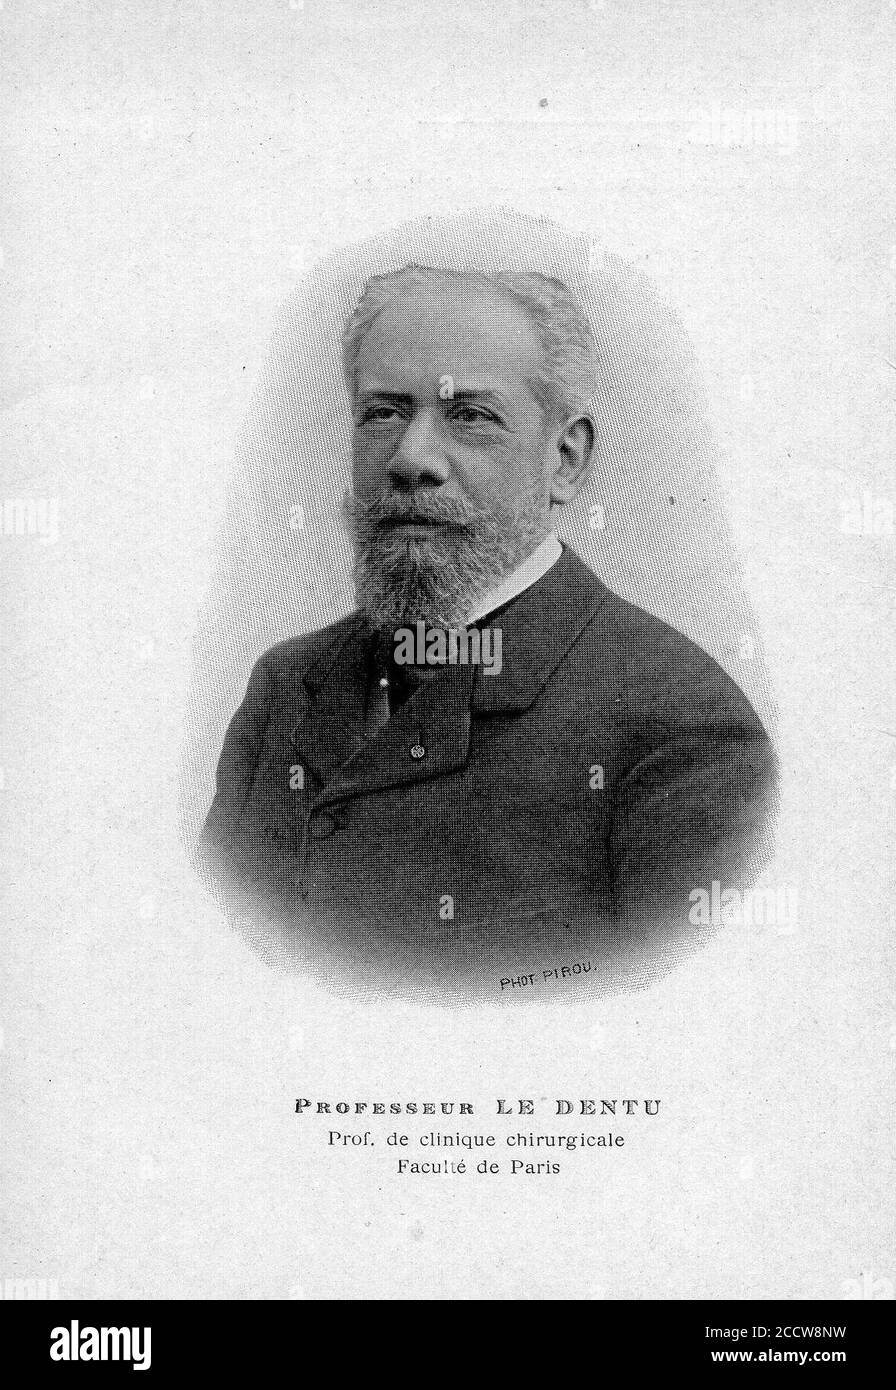 Jean-François-Auguste Le Dentu. Stock Photo